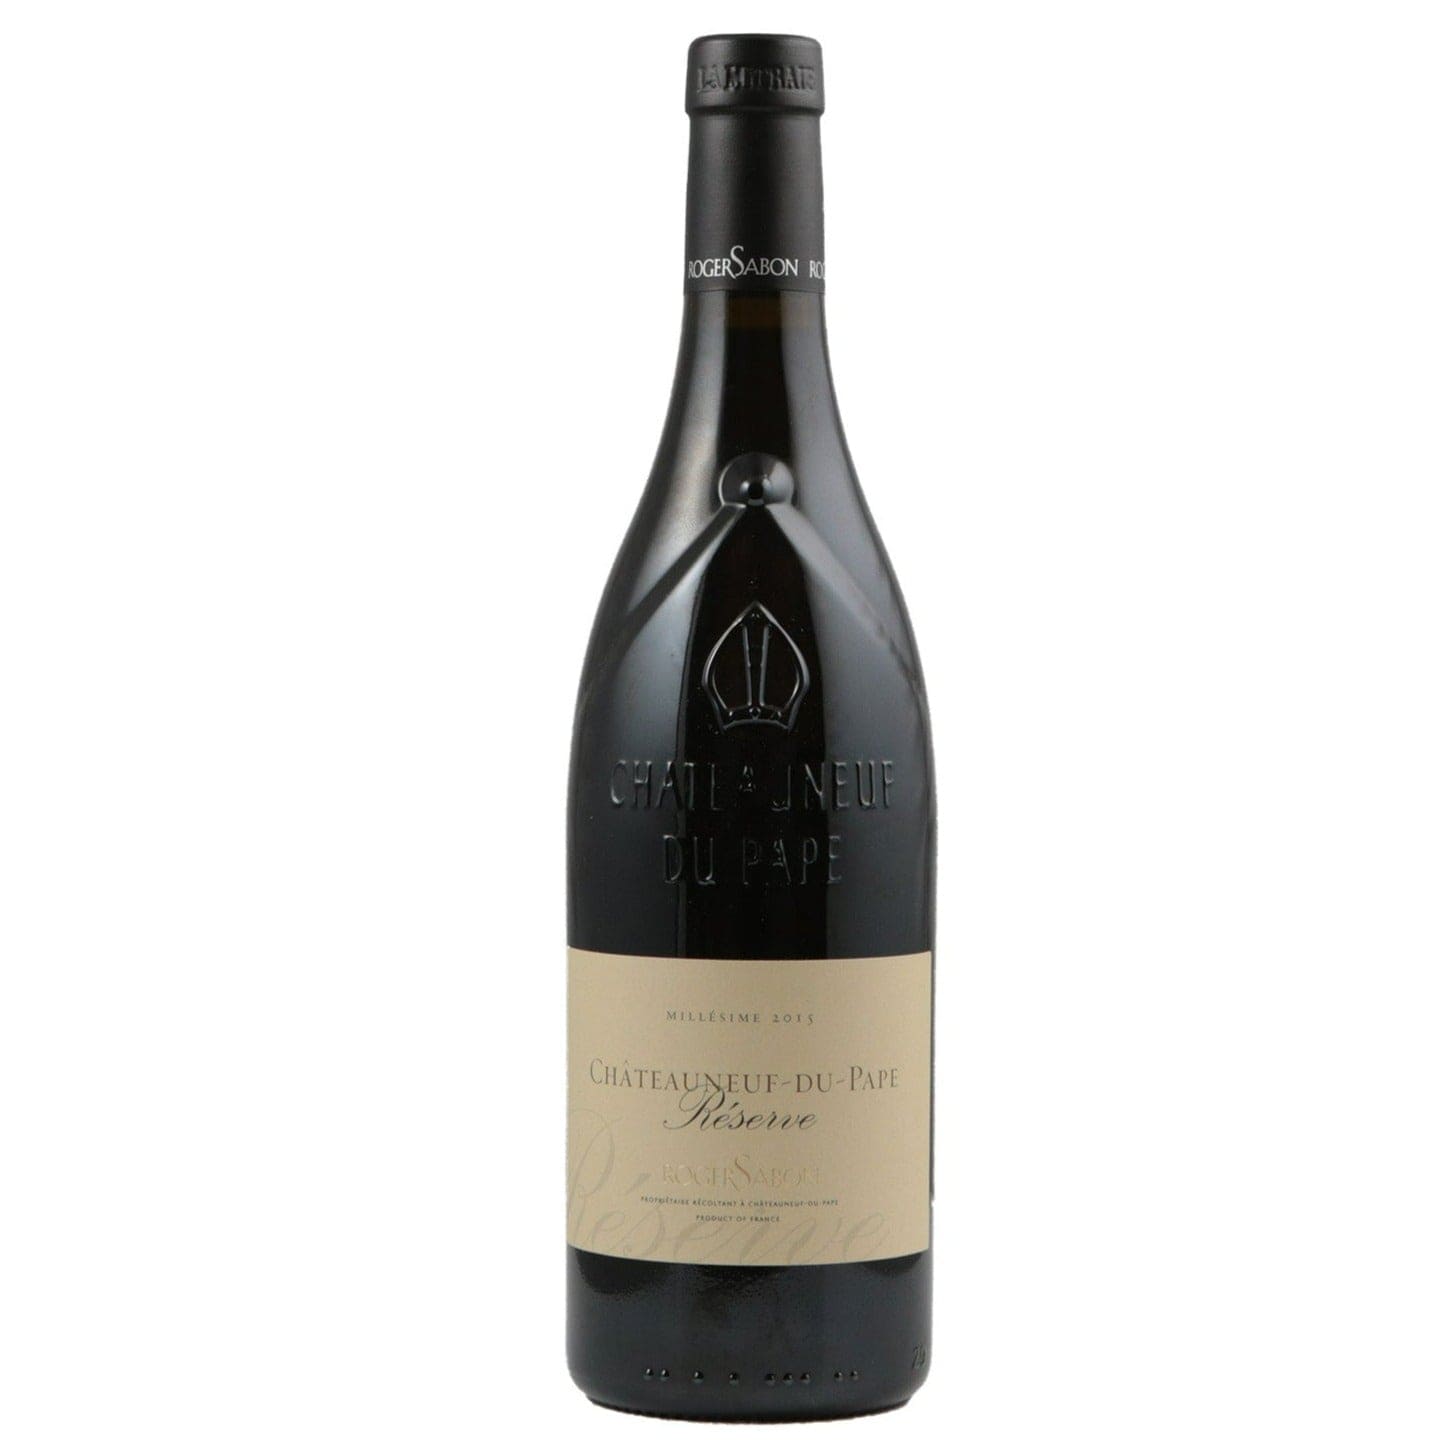 Single bottle of Red wine Dom. Roger Sabon, CDP Reserve, Chateauneuf du Pape, 2015 Grenache, Syrah, Mourvedre and Cinsault